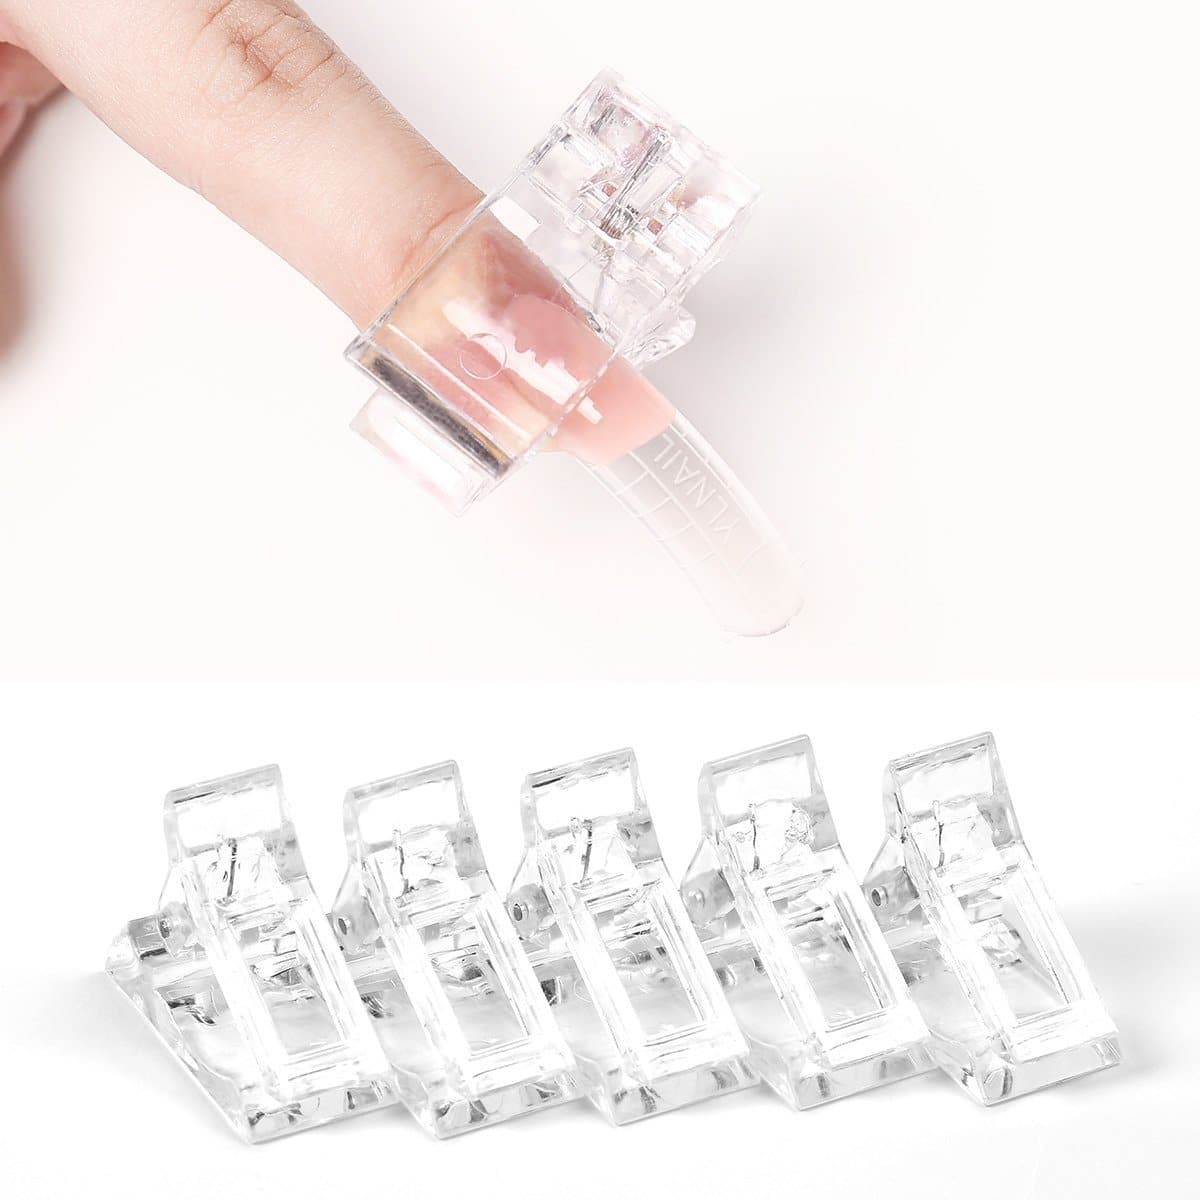 Heldig 12 pieces polygel nail clip, nail tip clip, nail tips clips nail  clips for poly gel nail extension 